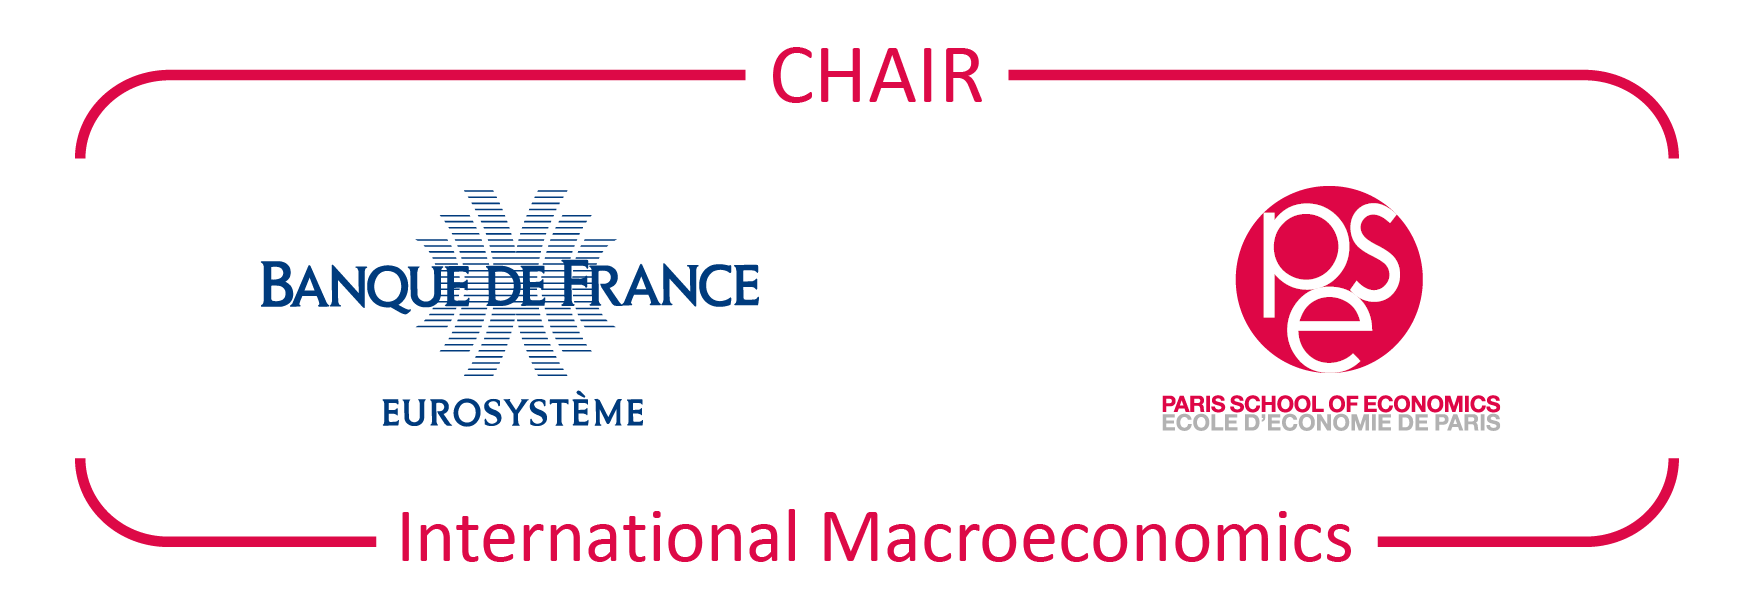 International Macroeconomics Chair